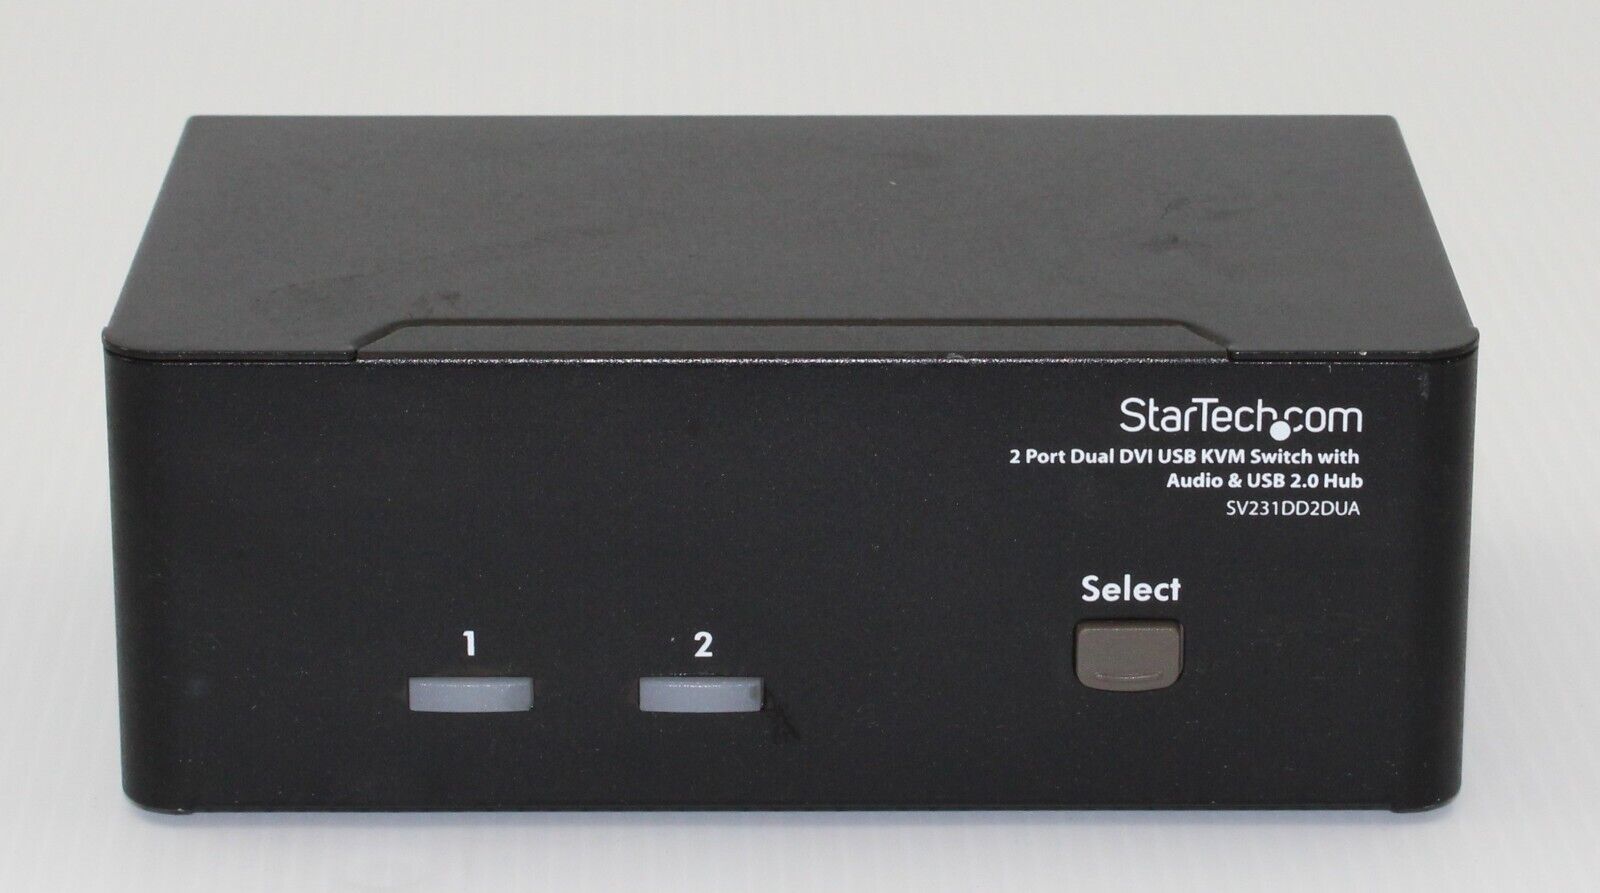 StarTech | SV231DD2DUA | 2 Port Dual DVI USB KVM Switch with Audio & USB 2.0 Hub